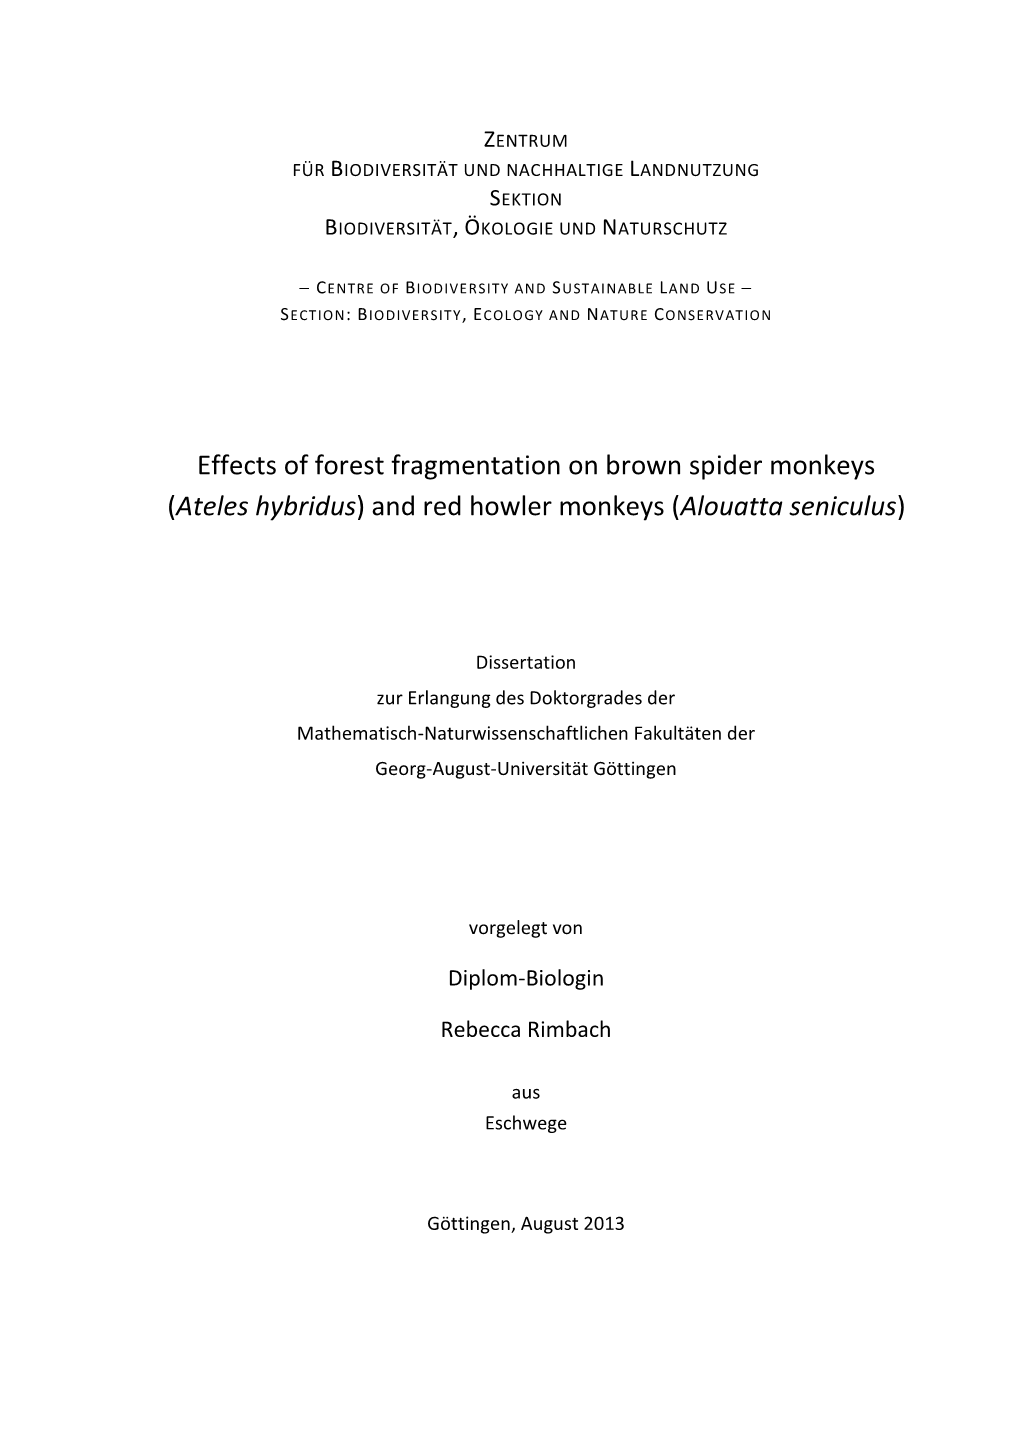 Effects of Forest Fragmentation on Brown Spider Monkeys (Ateles Hybridus) and Red Howler Monkeys (Alouatta Seniculus)